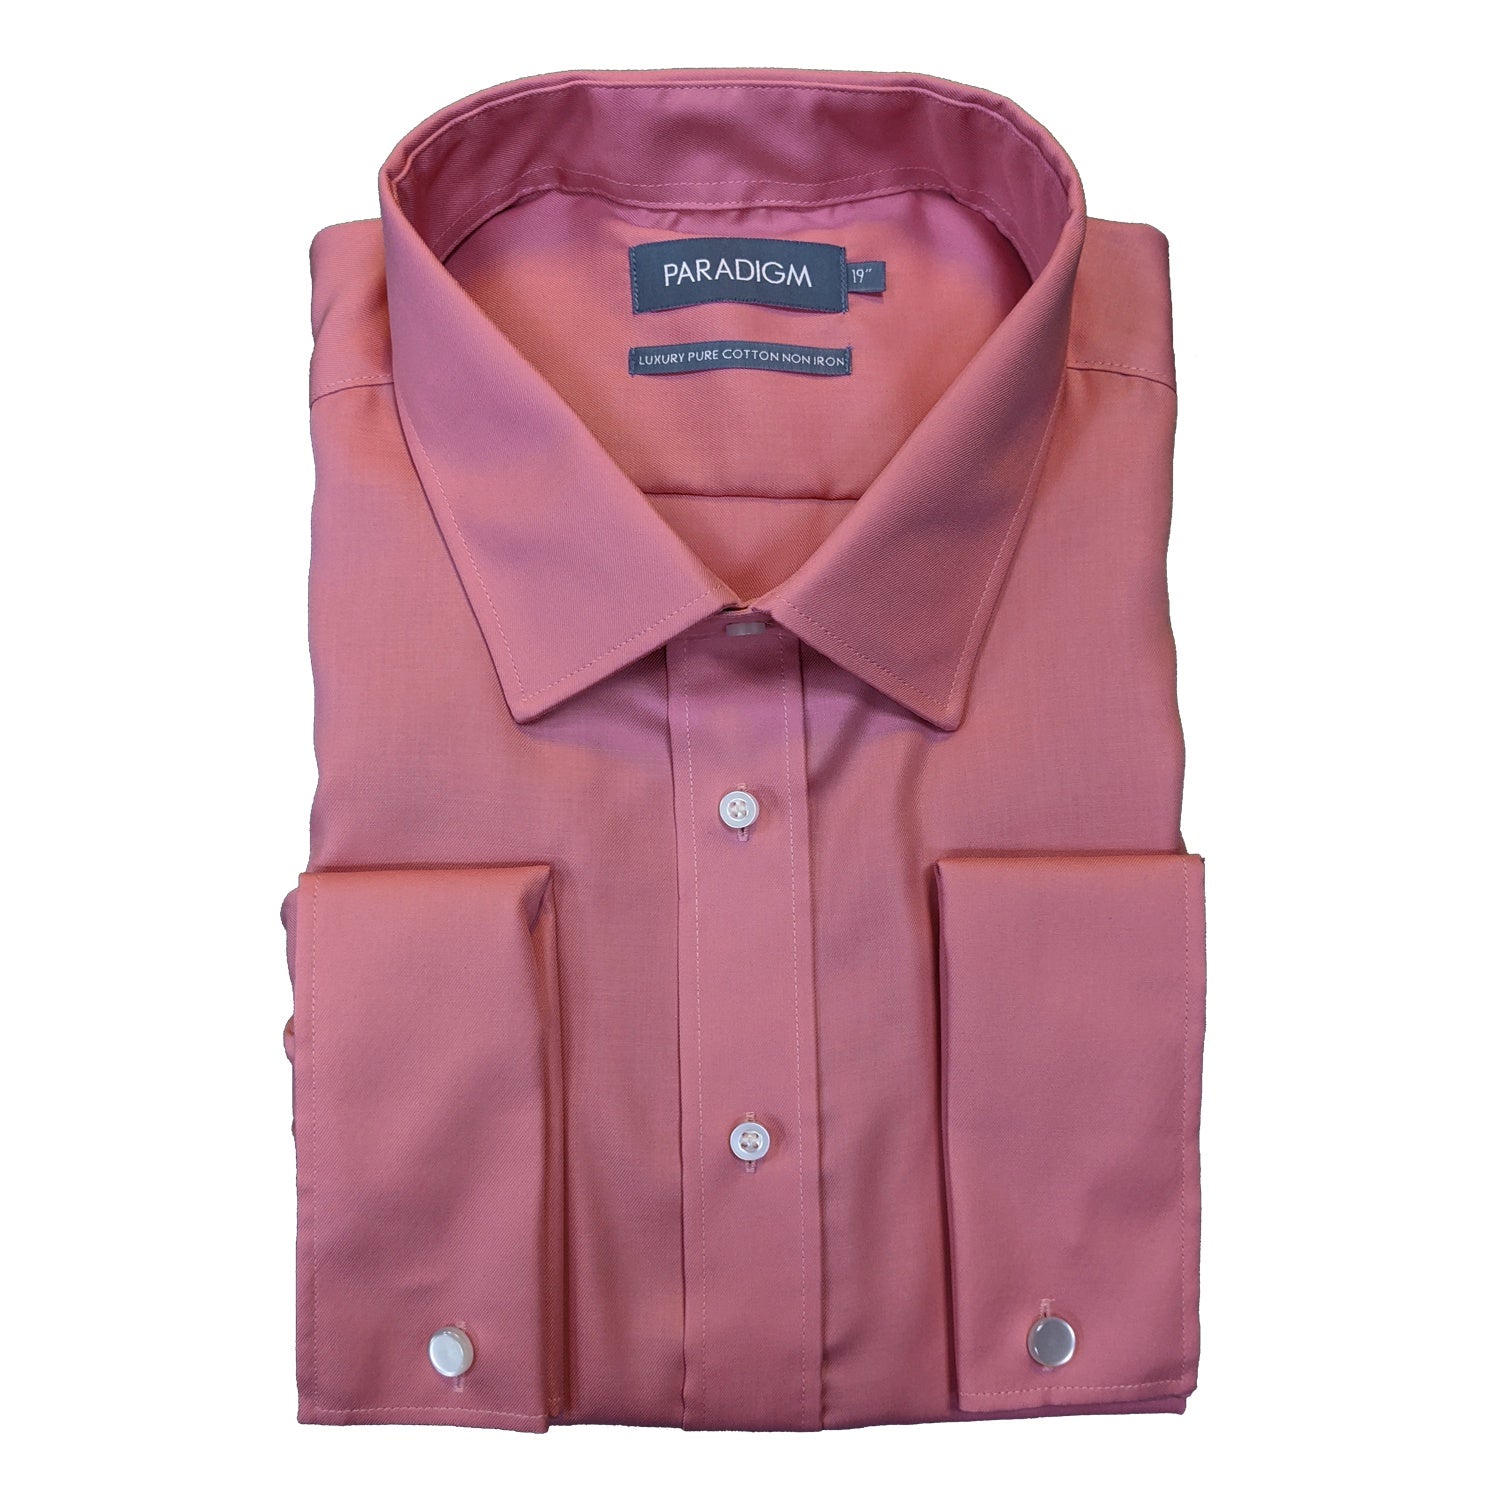 Paradigm Double Cuff Shirt - SLX8501 - Rose Pink 1